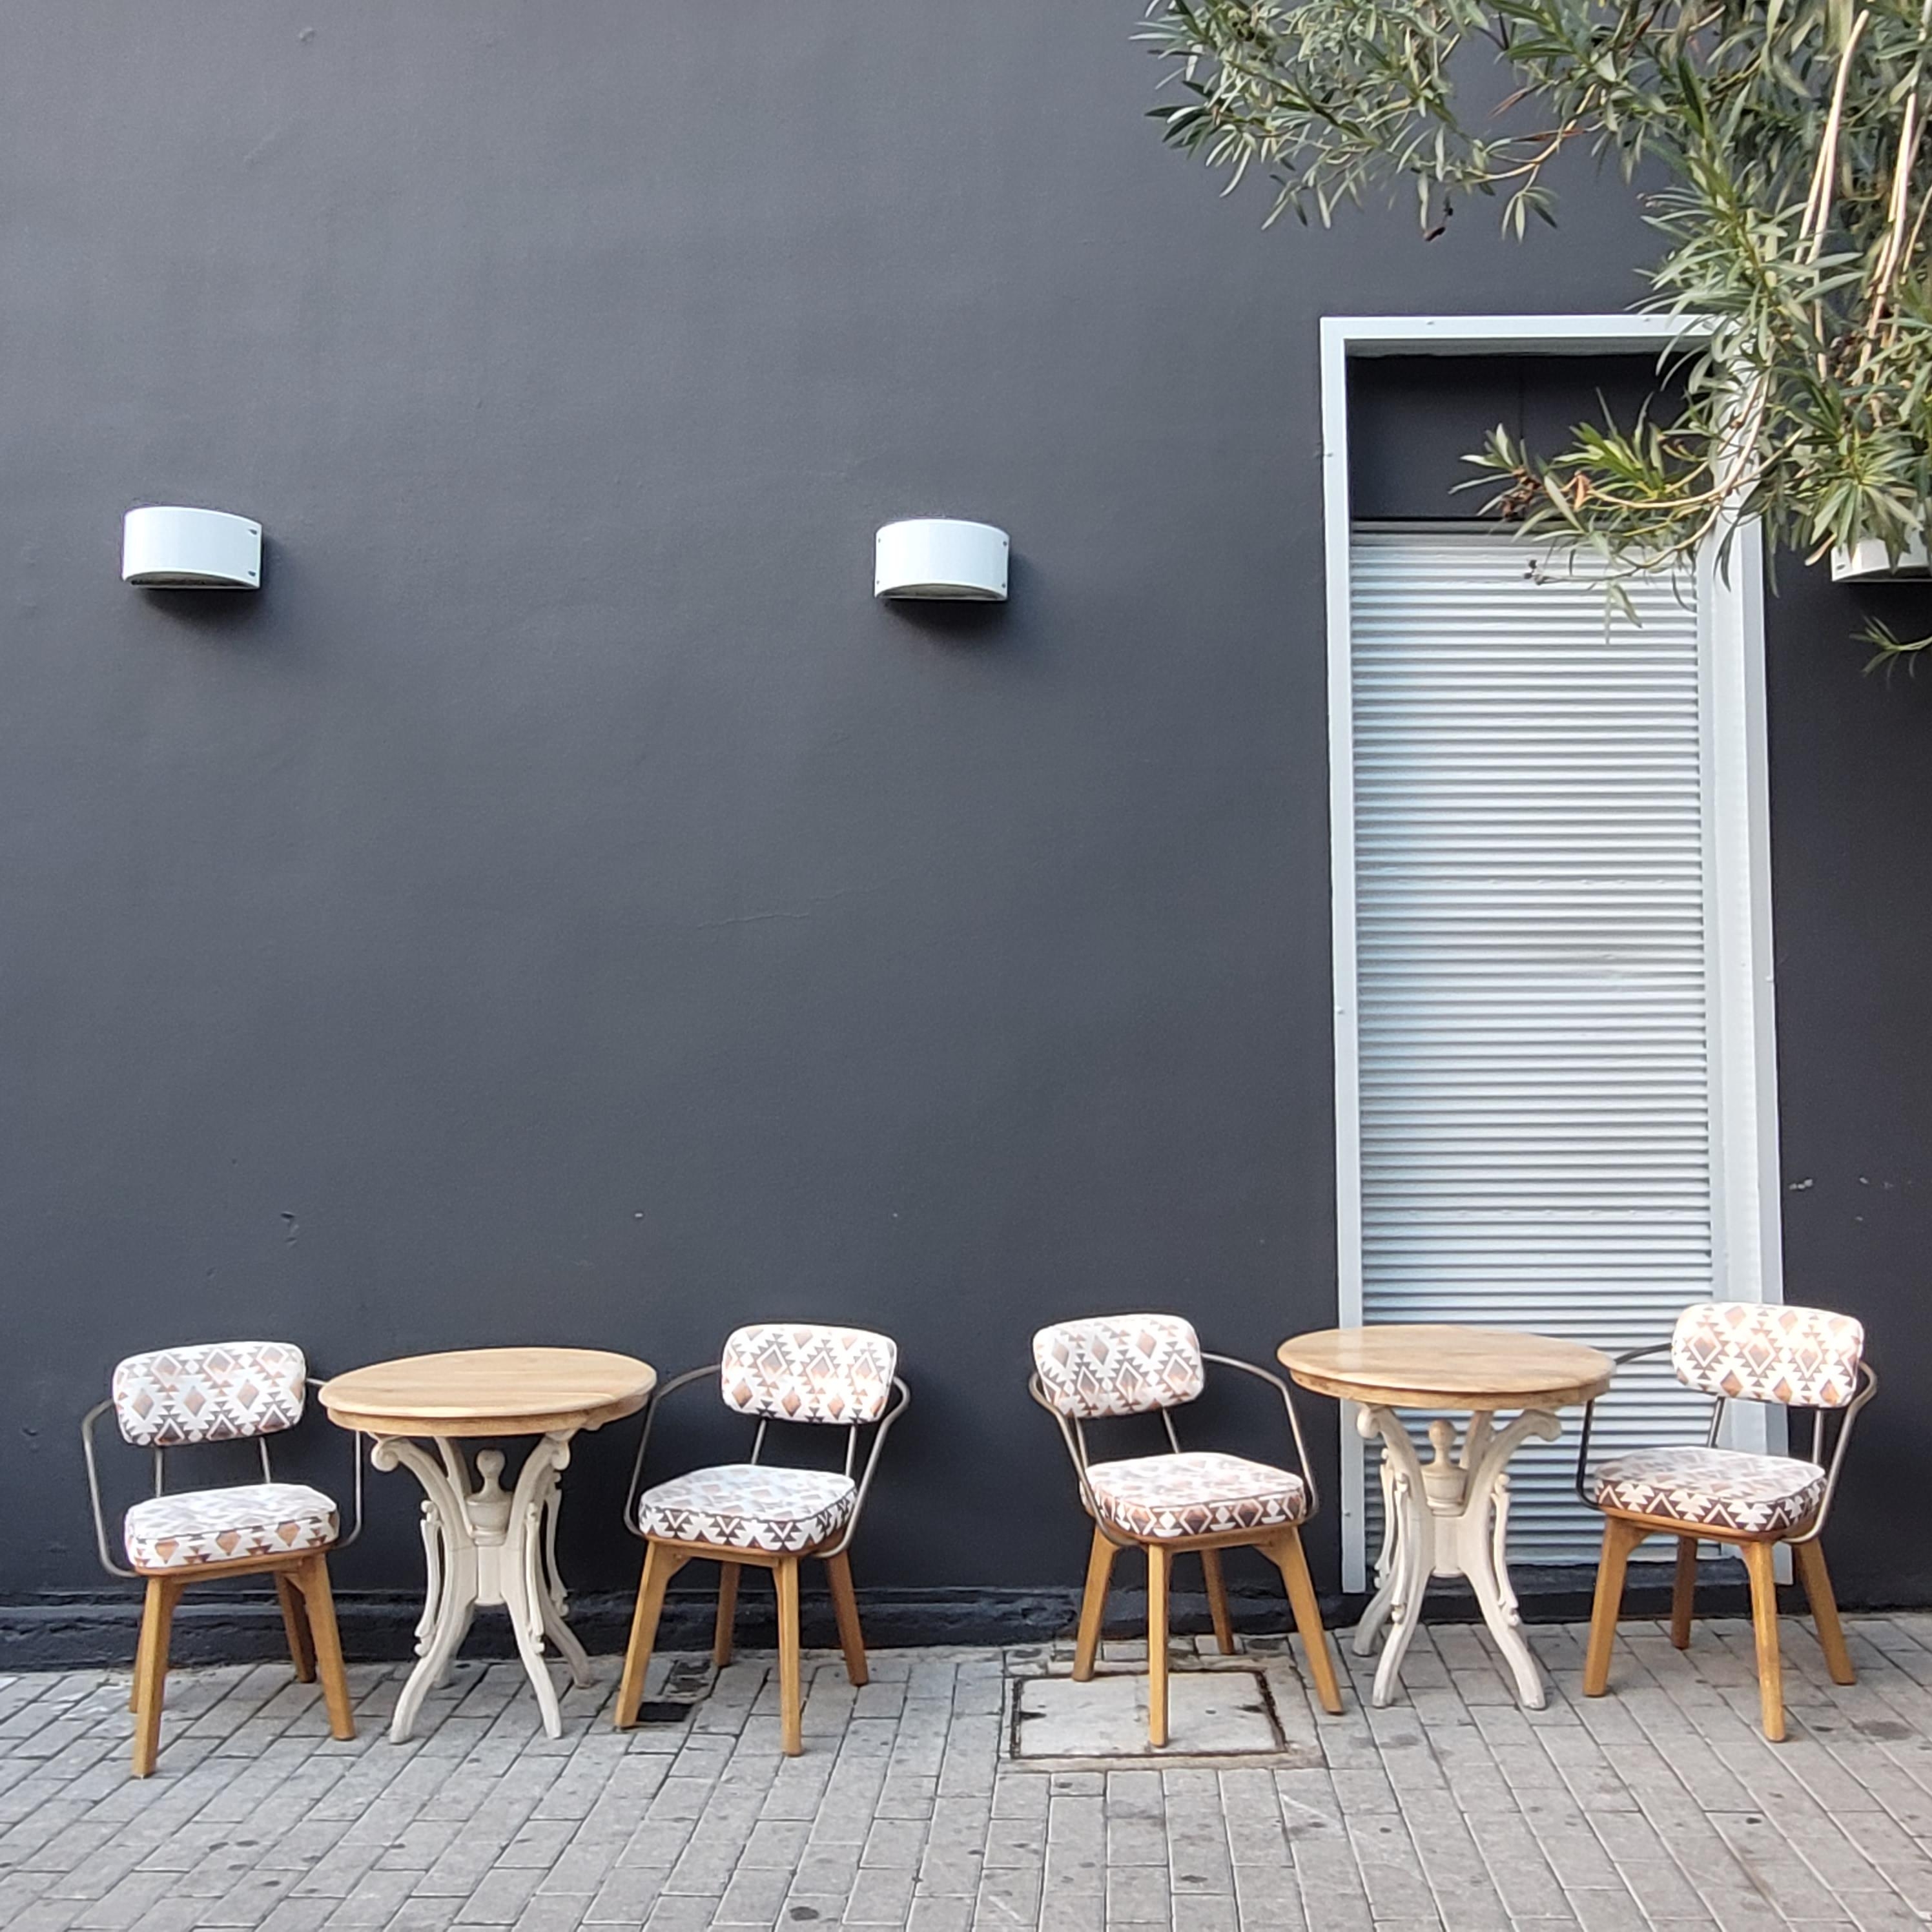 Take a seat
#Athen #coffee #reiseliebe